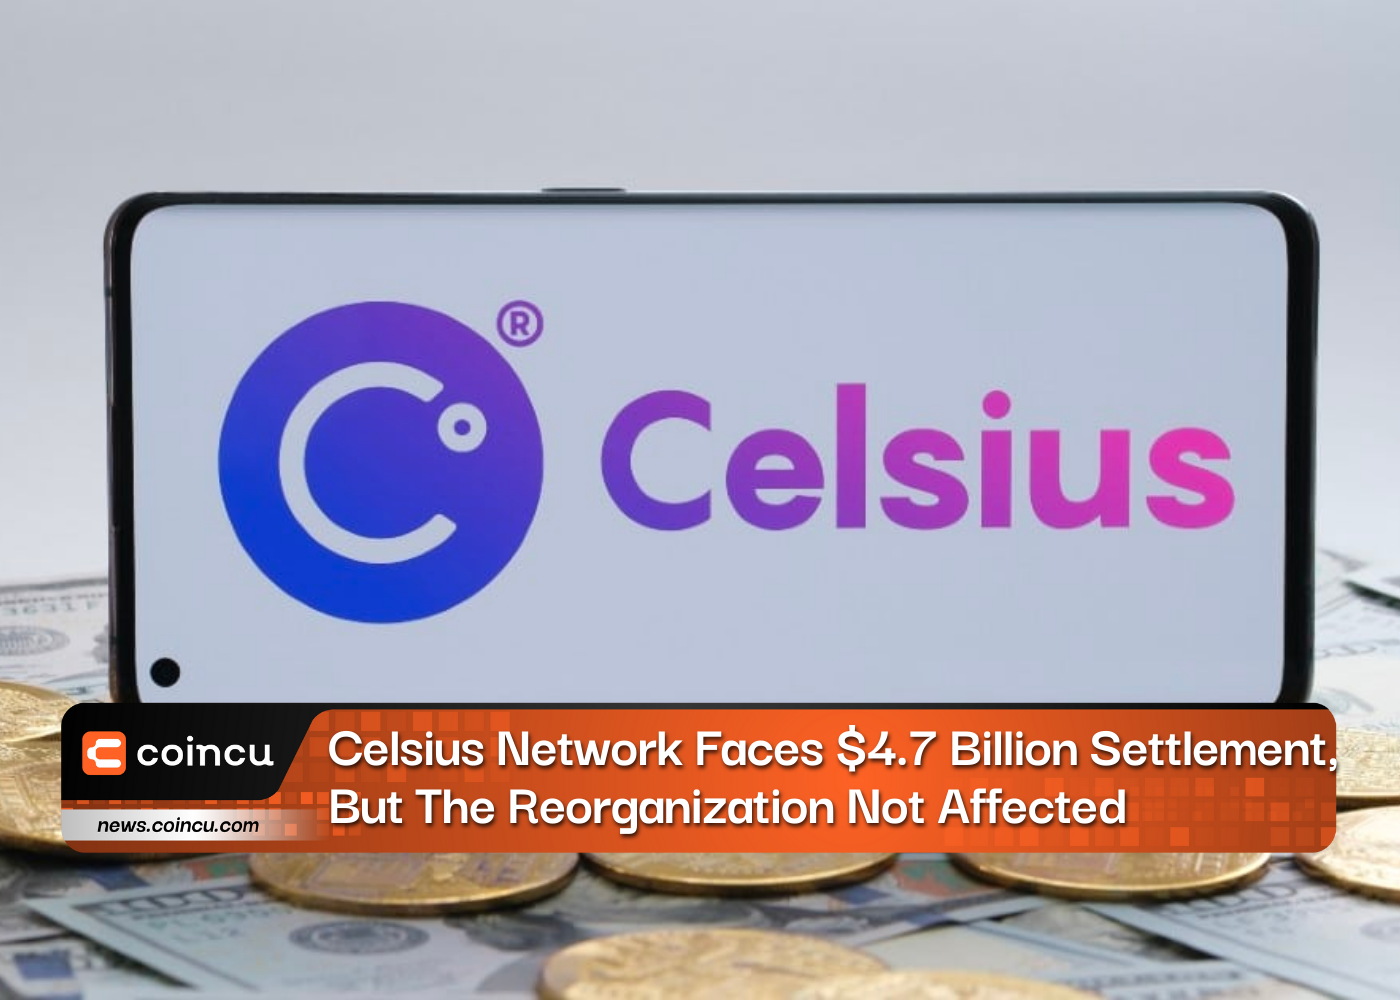 Celsius Network Faces $4.7 Billion Settlement, But The Reorganization Not Affected